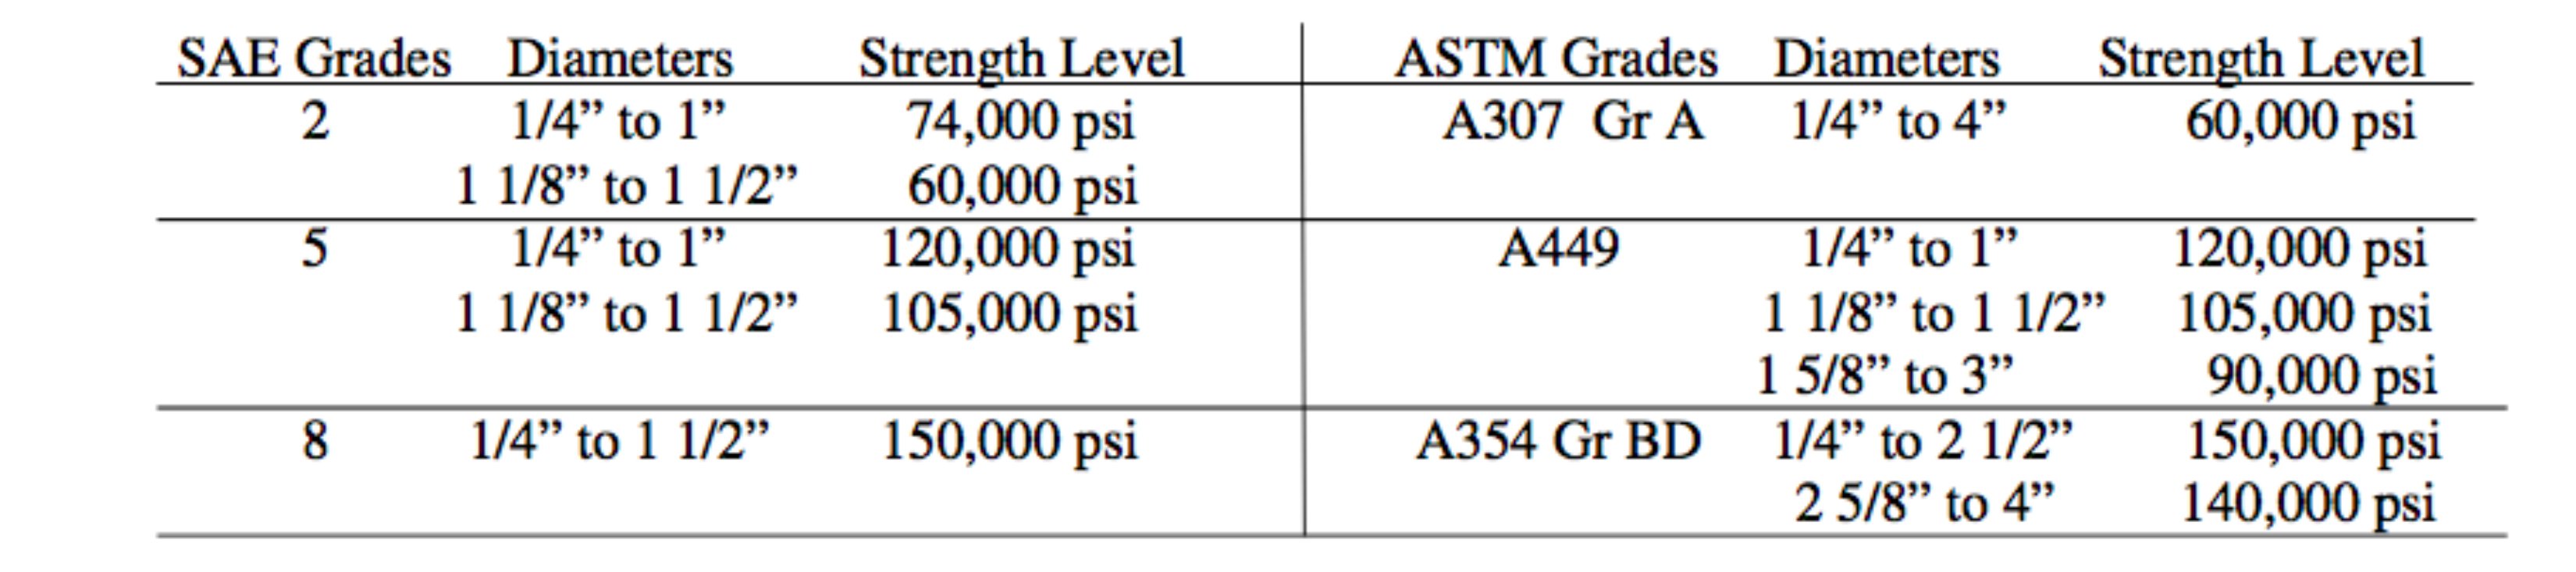 SAE Grades vs. ASTM Strength Levels